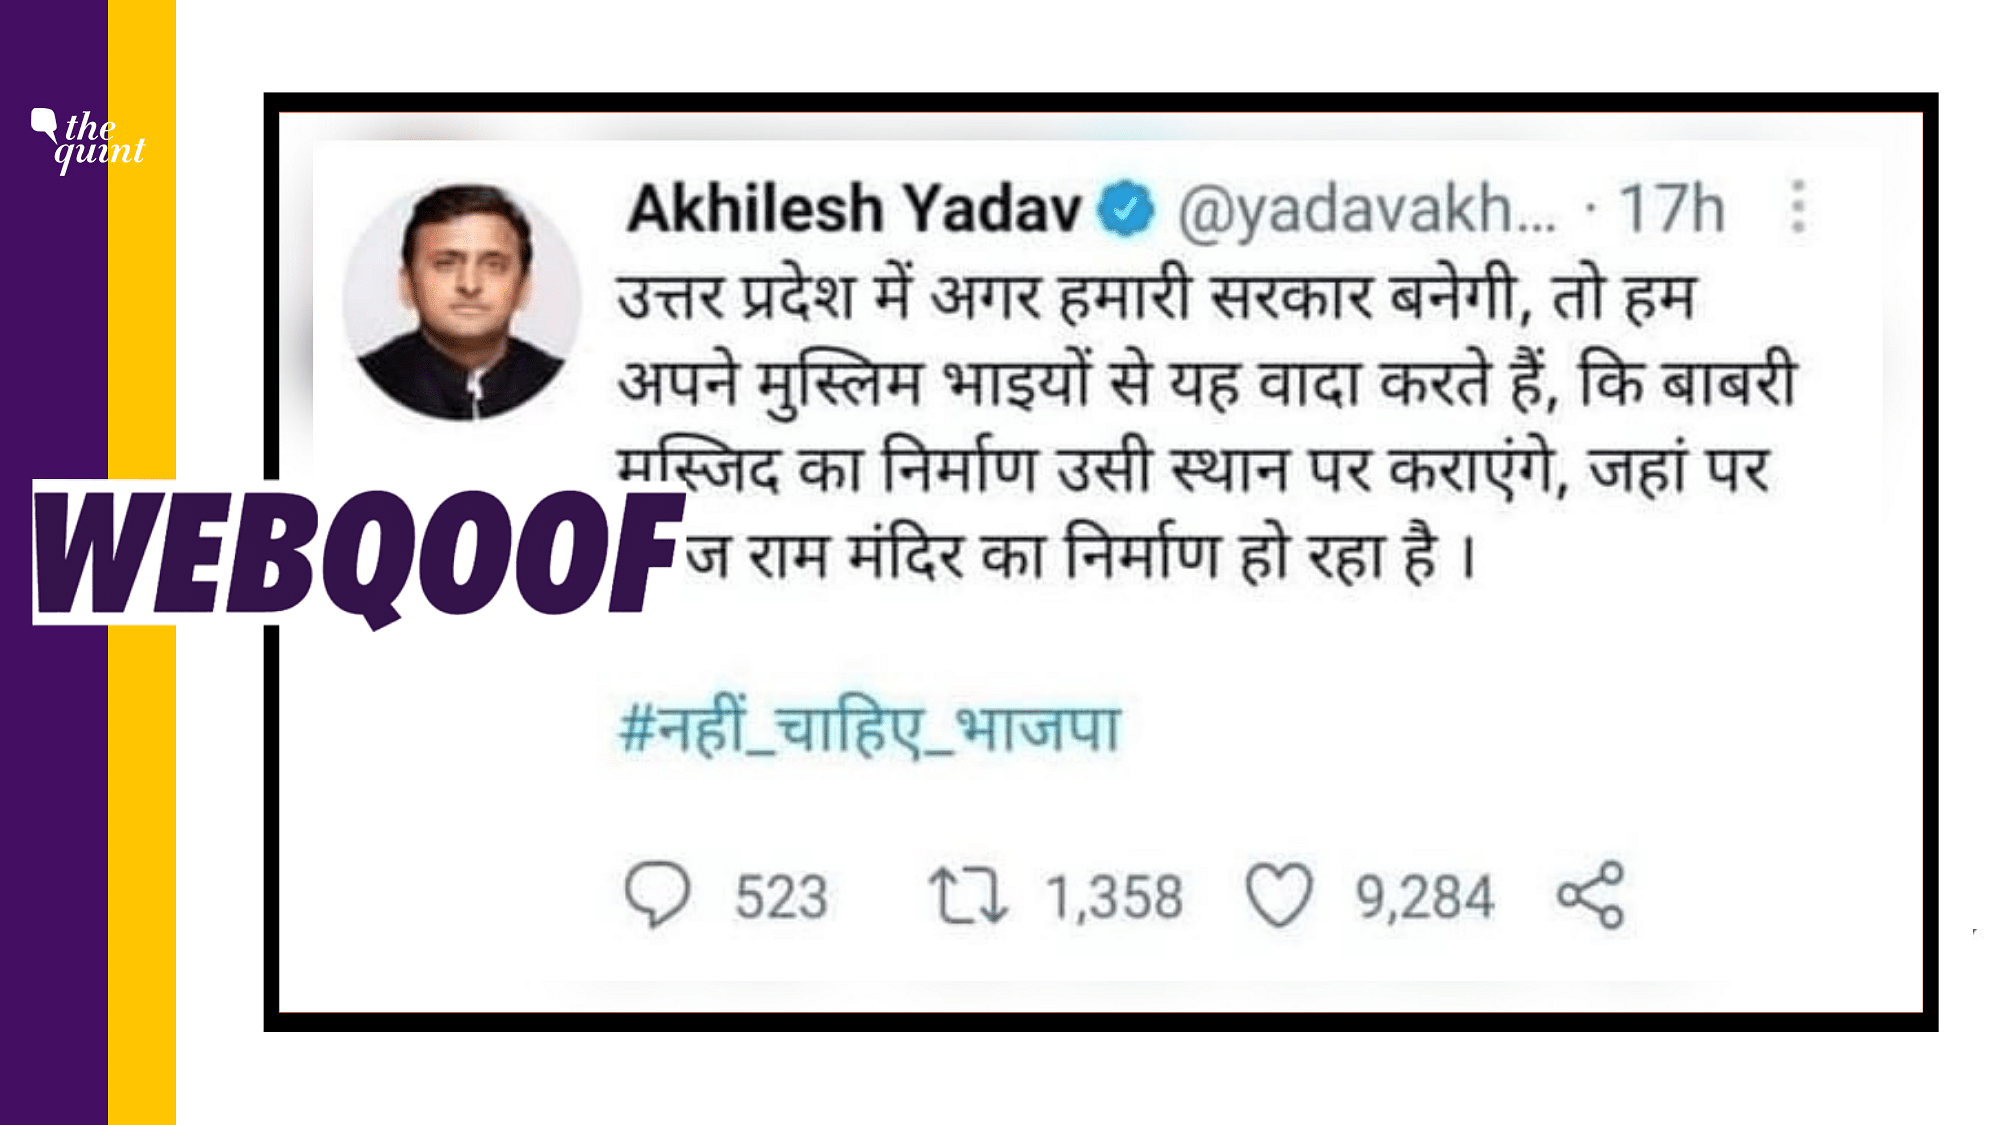 <div class="paragraphs"><p>The screenshot of Akhilesh Yadav's tweet promising to rebuild the Babri Masjid in Ayodhya is fake.</p></div>